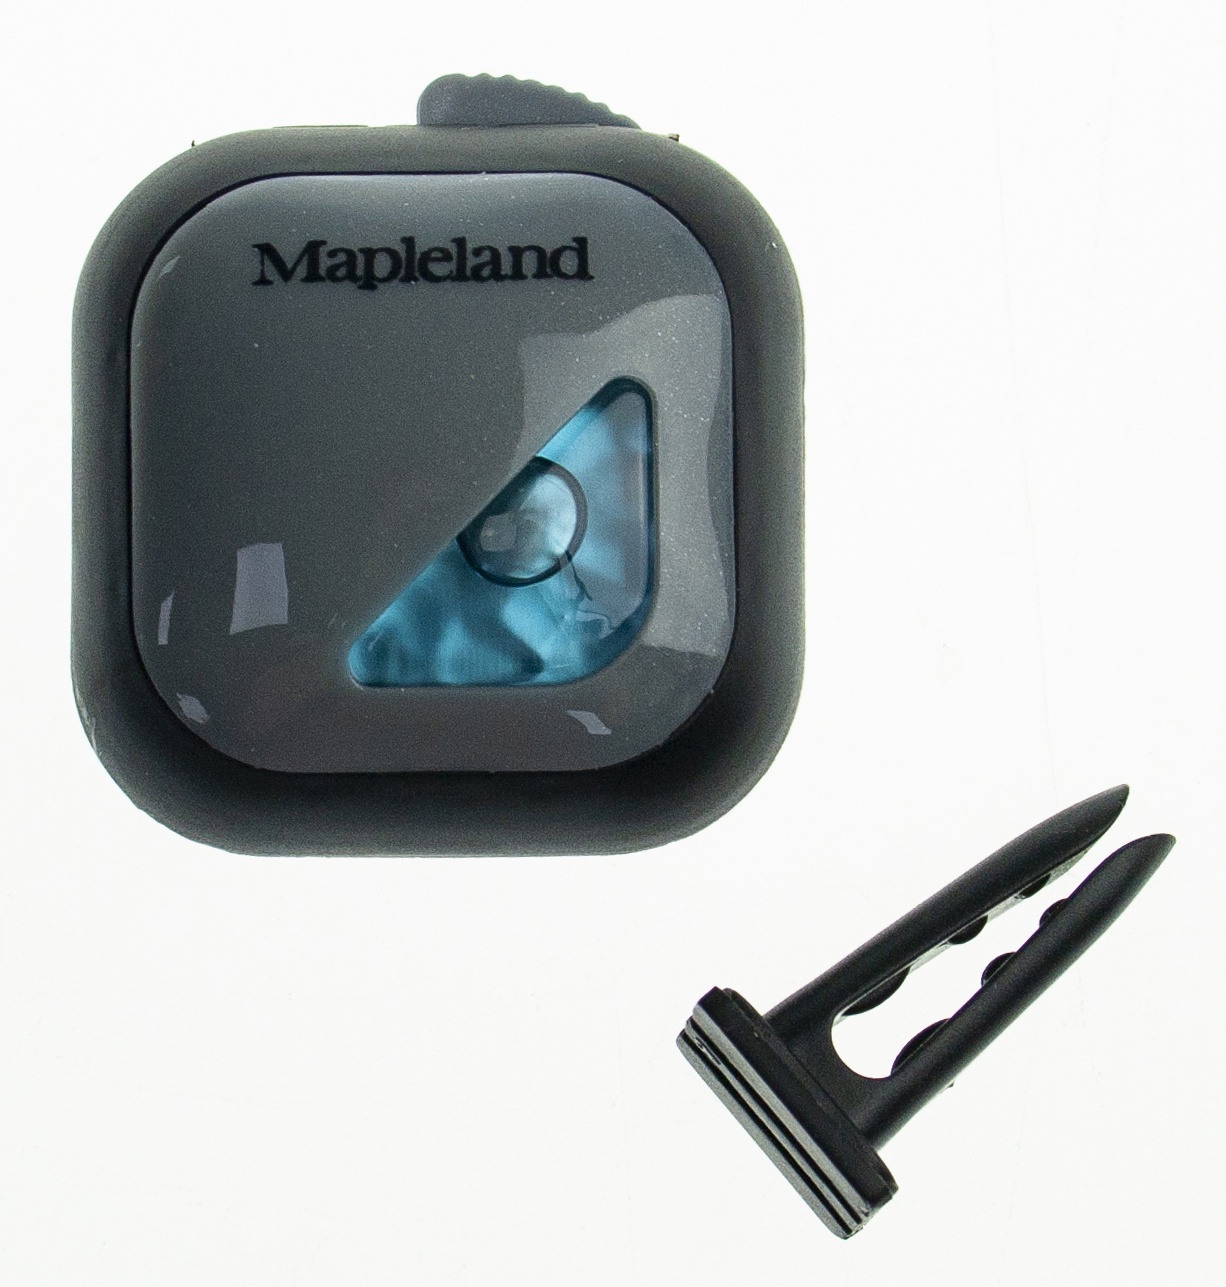 фото Комплект ароматизаторов для автомобиля Mapleland M403 Peaceful и M401 Charming PA0493, 2 шт